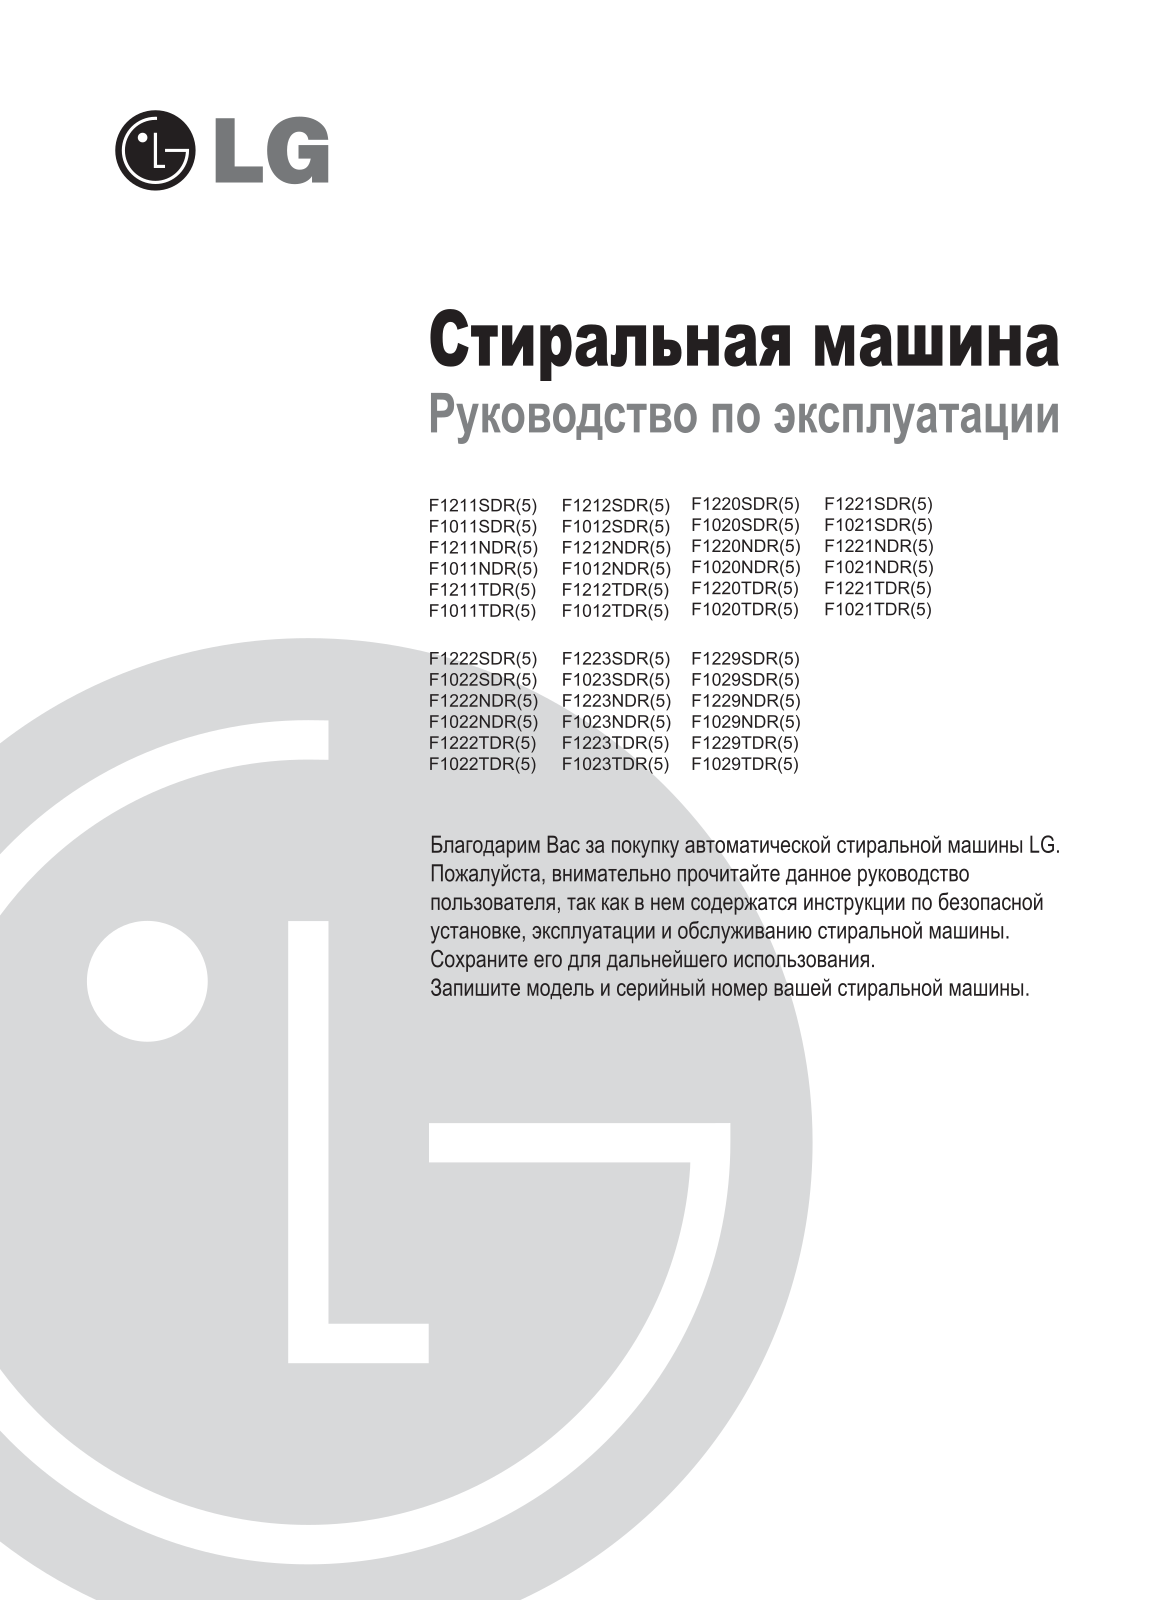 LG F1222SDR TDR, TDR, NDR User Manual